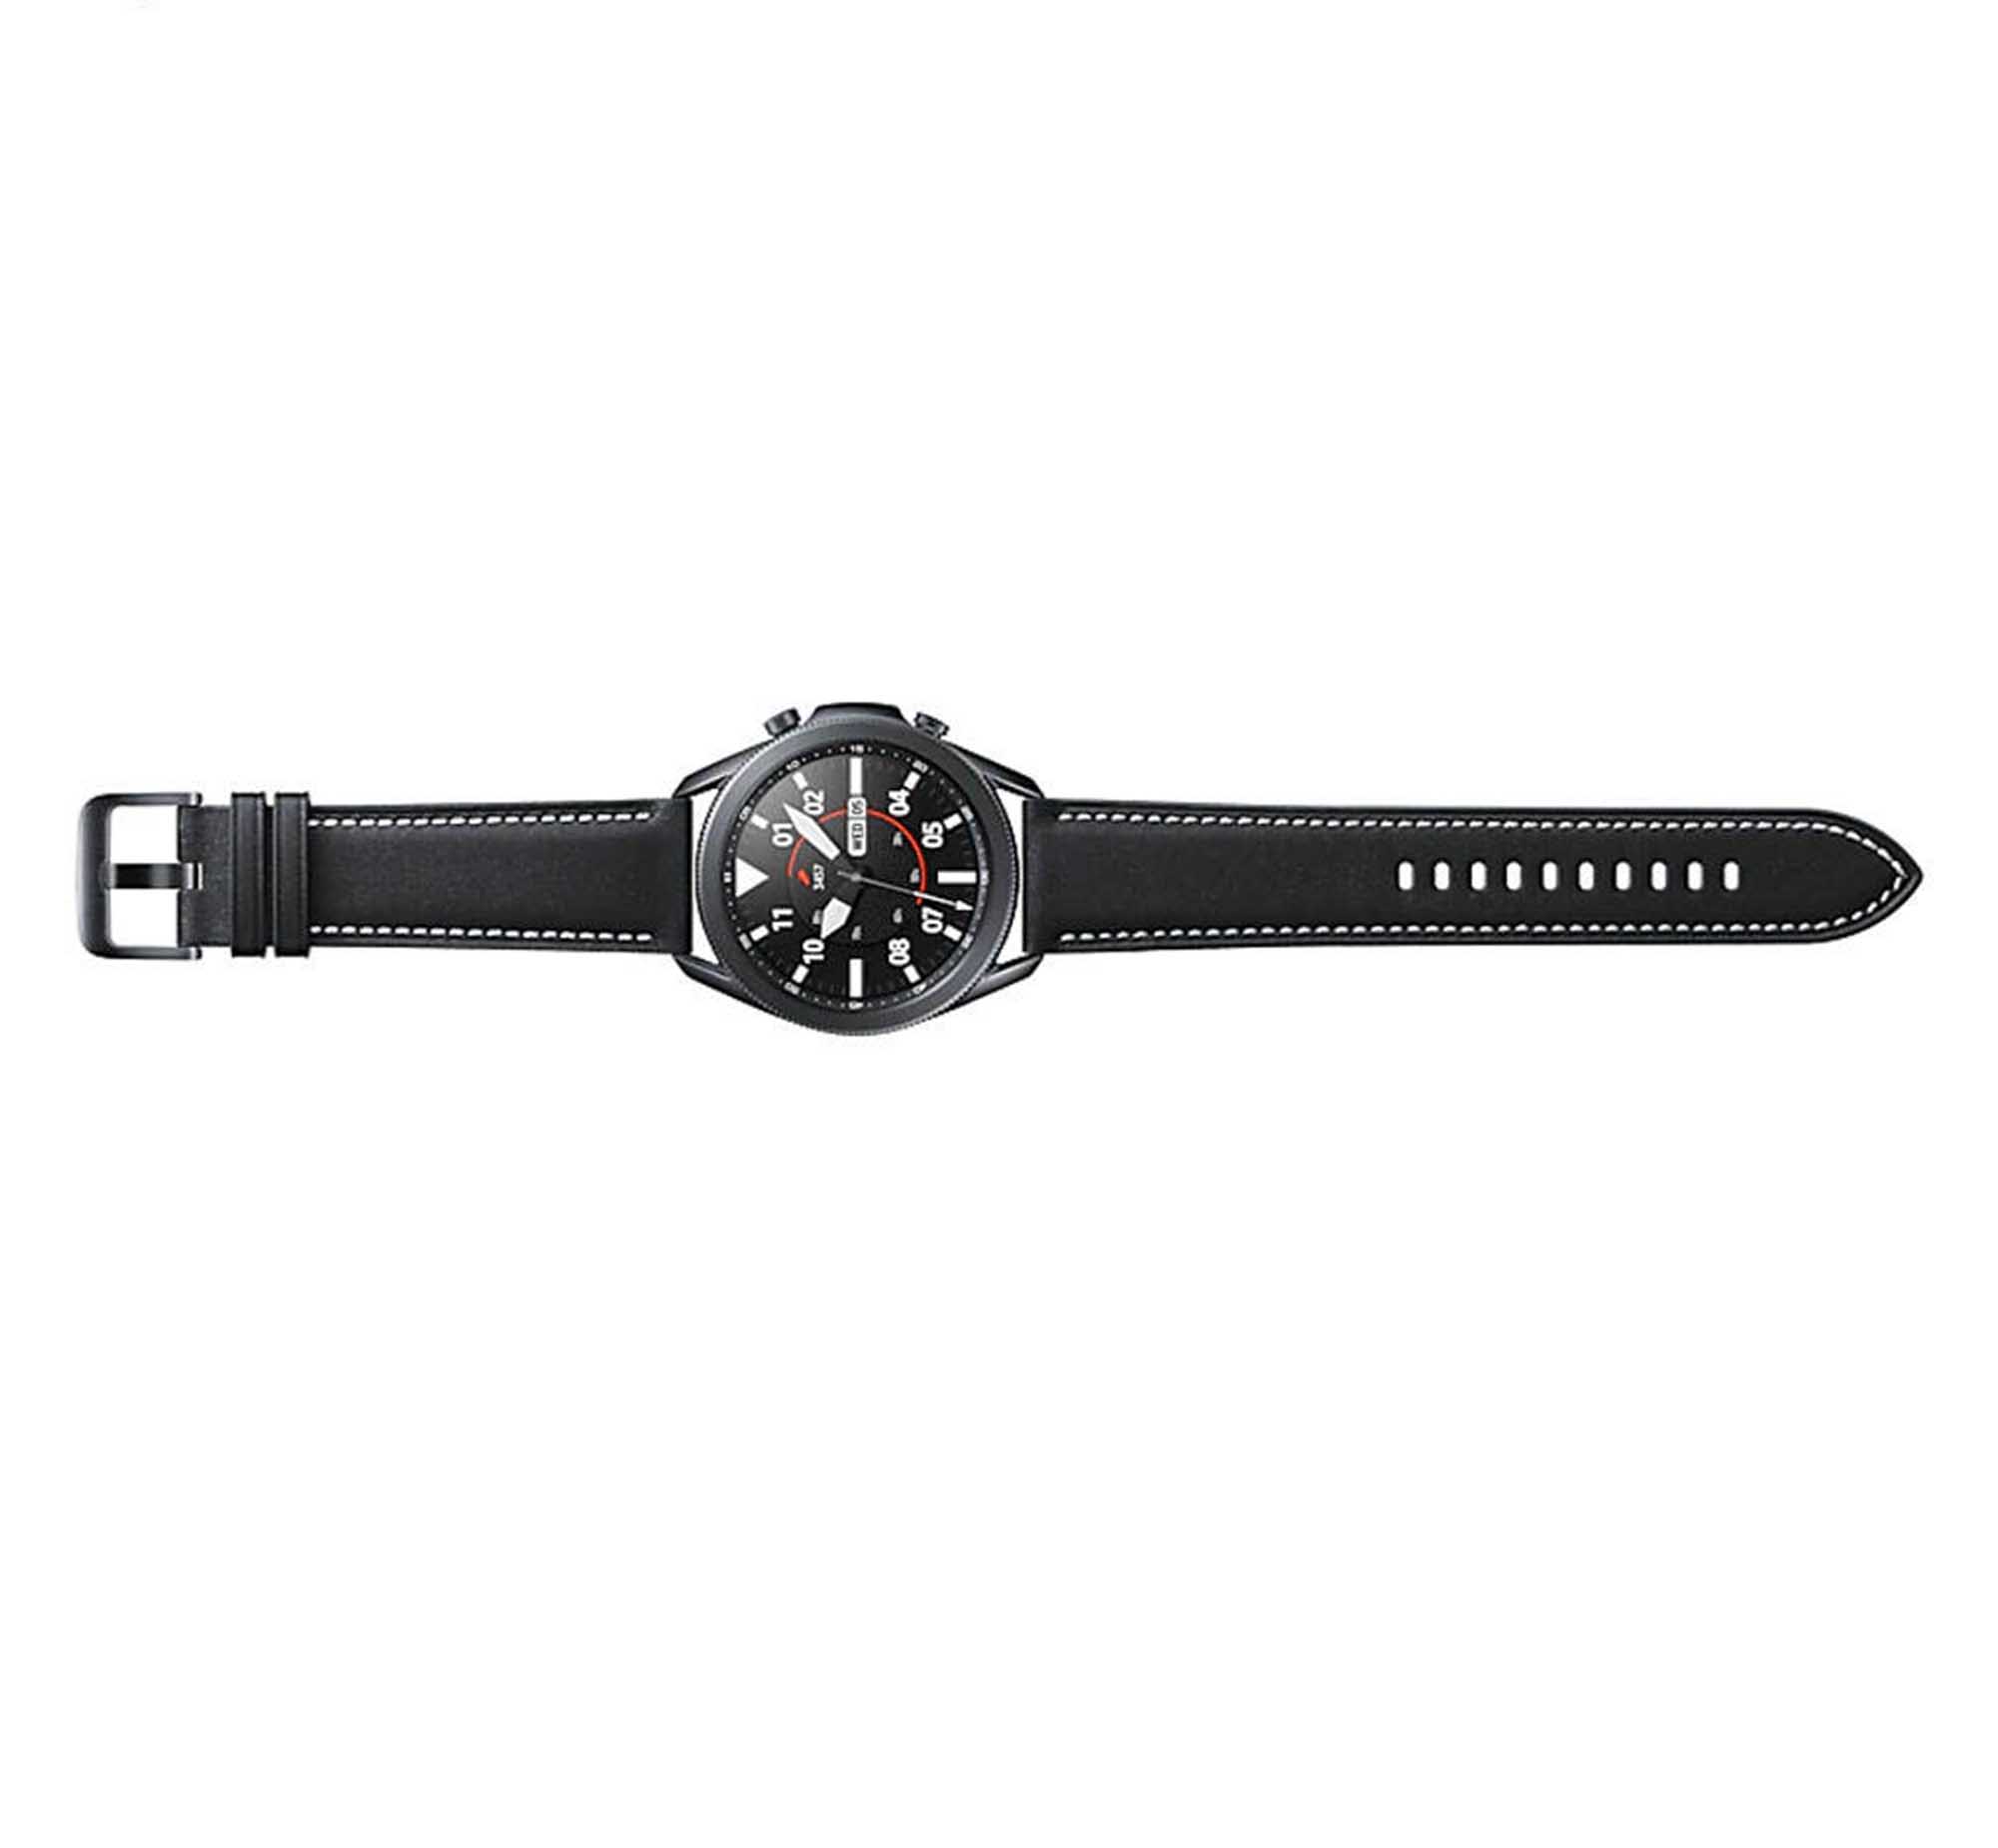  قیمت ساعت هوشمند سامسونگ Galaxy Watch 3